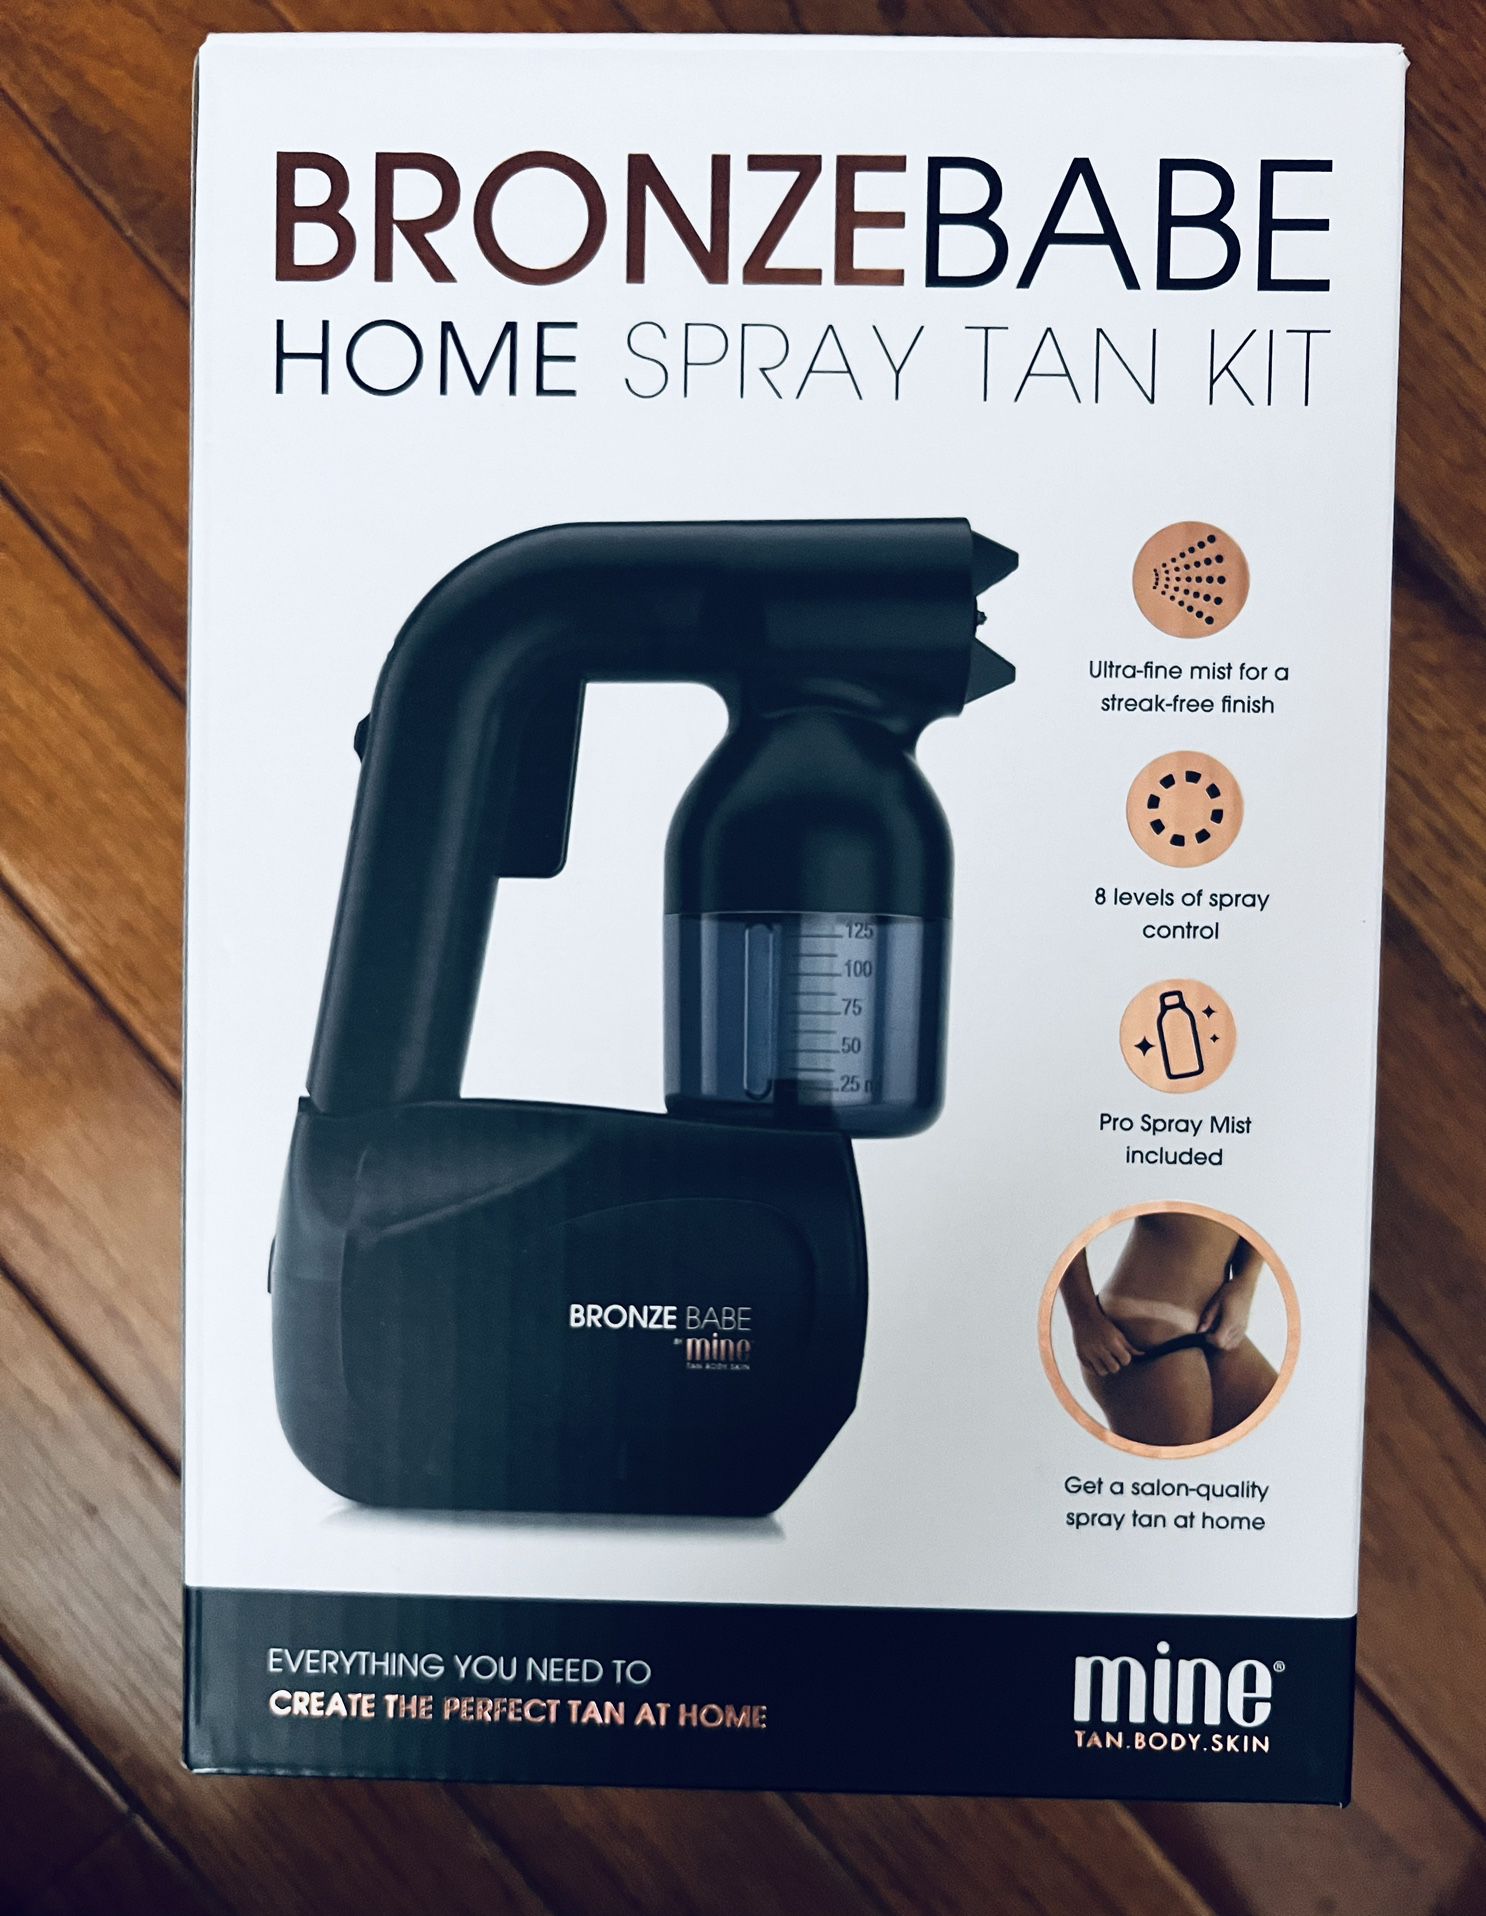 Bronze Babe Home Spray Tan Kit